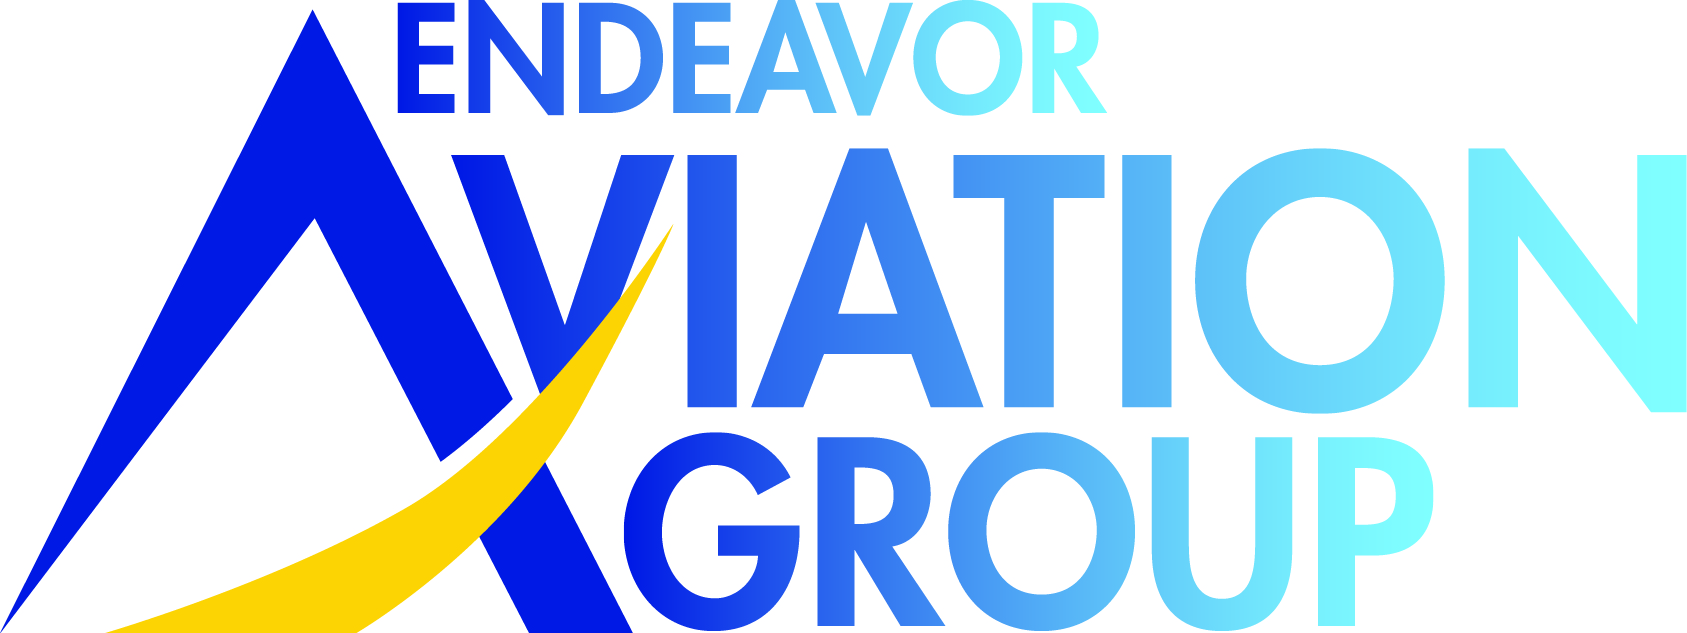 Endeavor Aviation Group